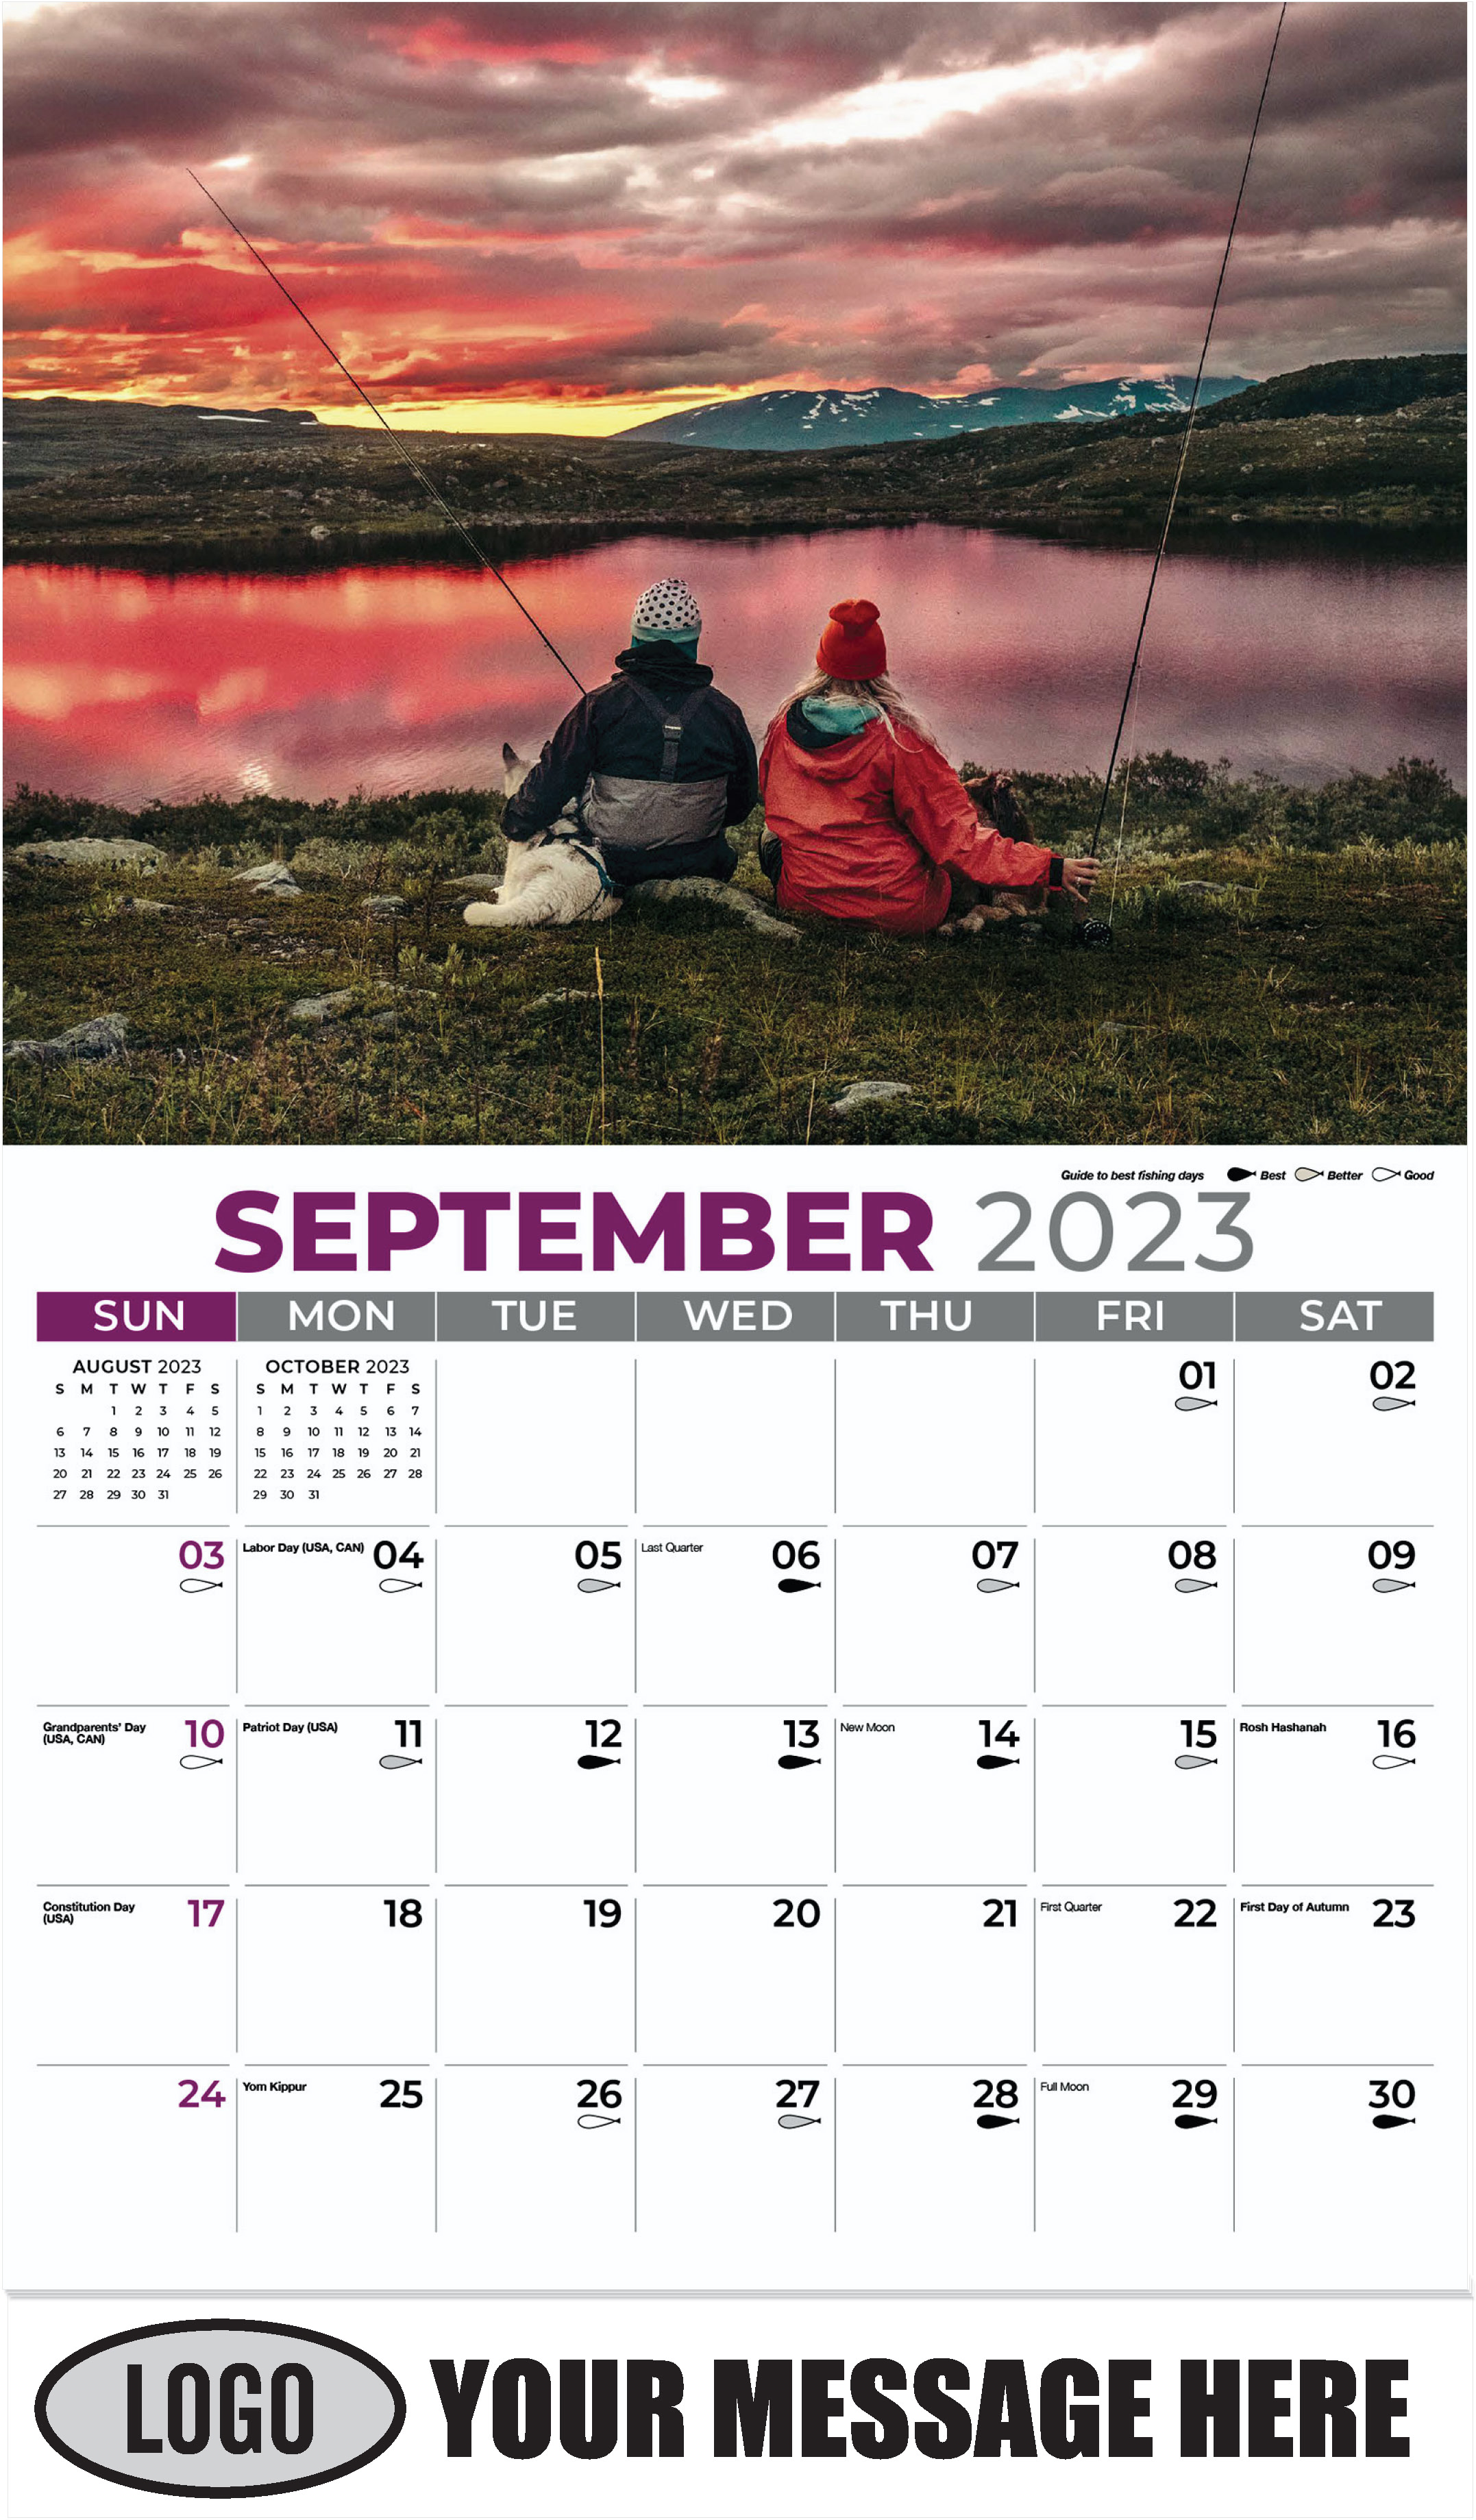 September - Fishing & Hunting 2023 Promotional Calendar